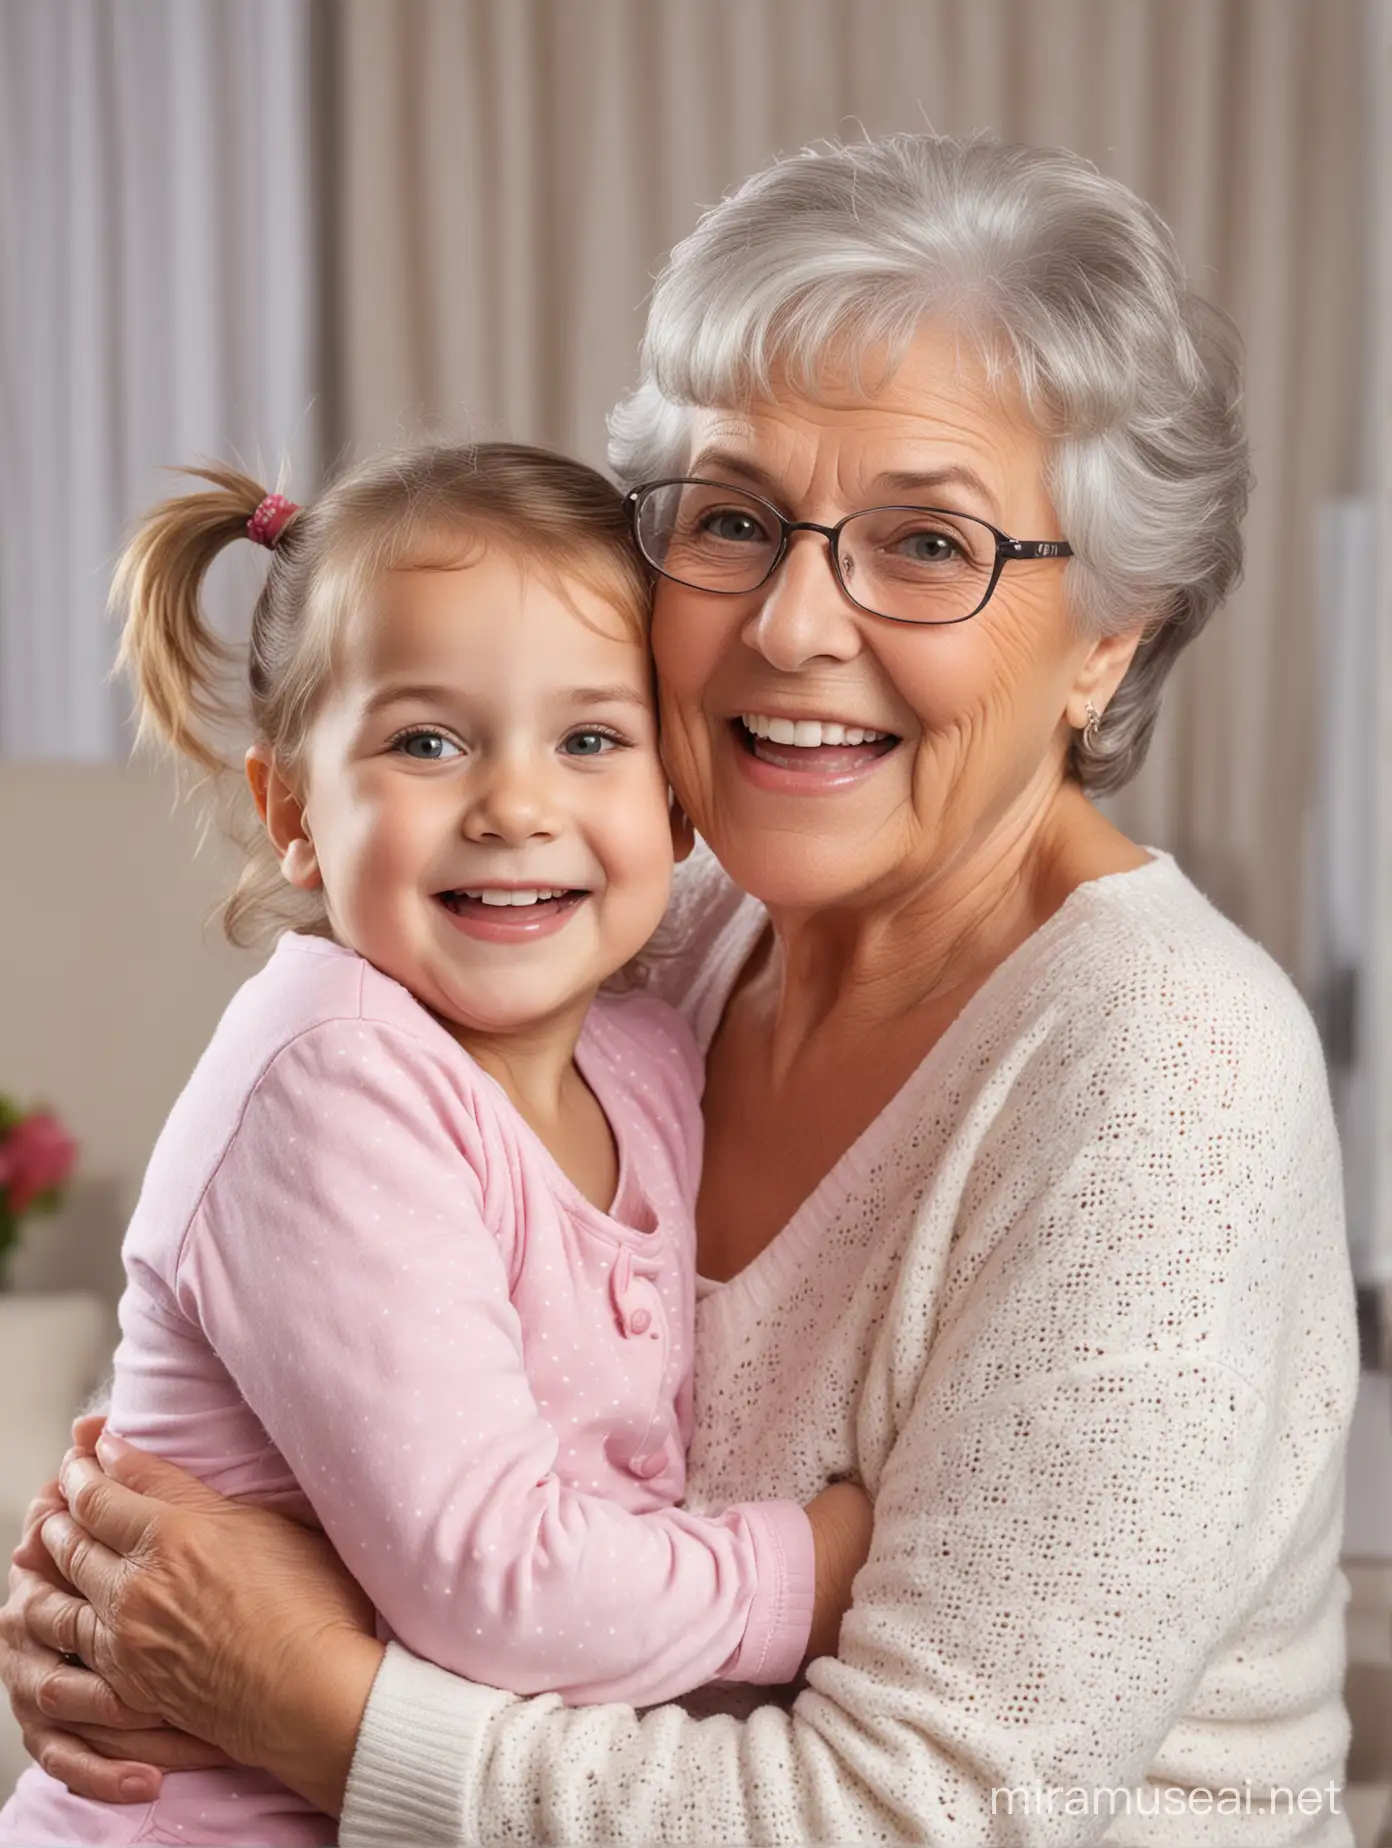 Joyful Grandmother and Granddaughter Bonding Time